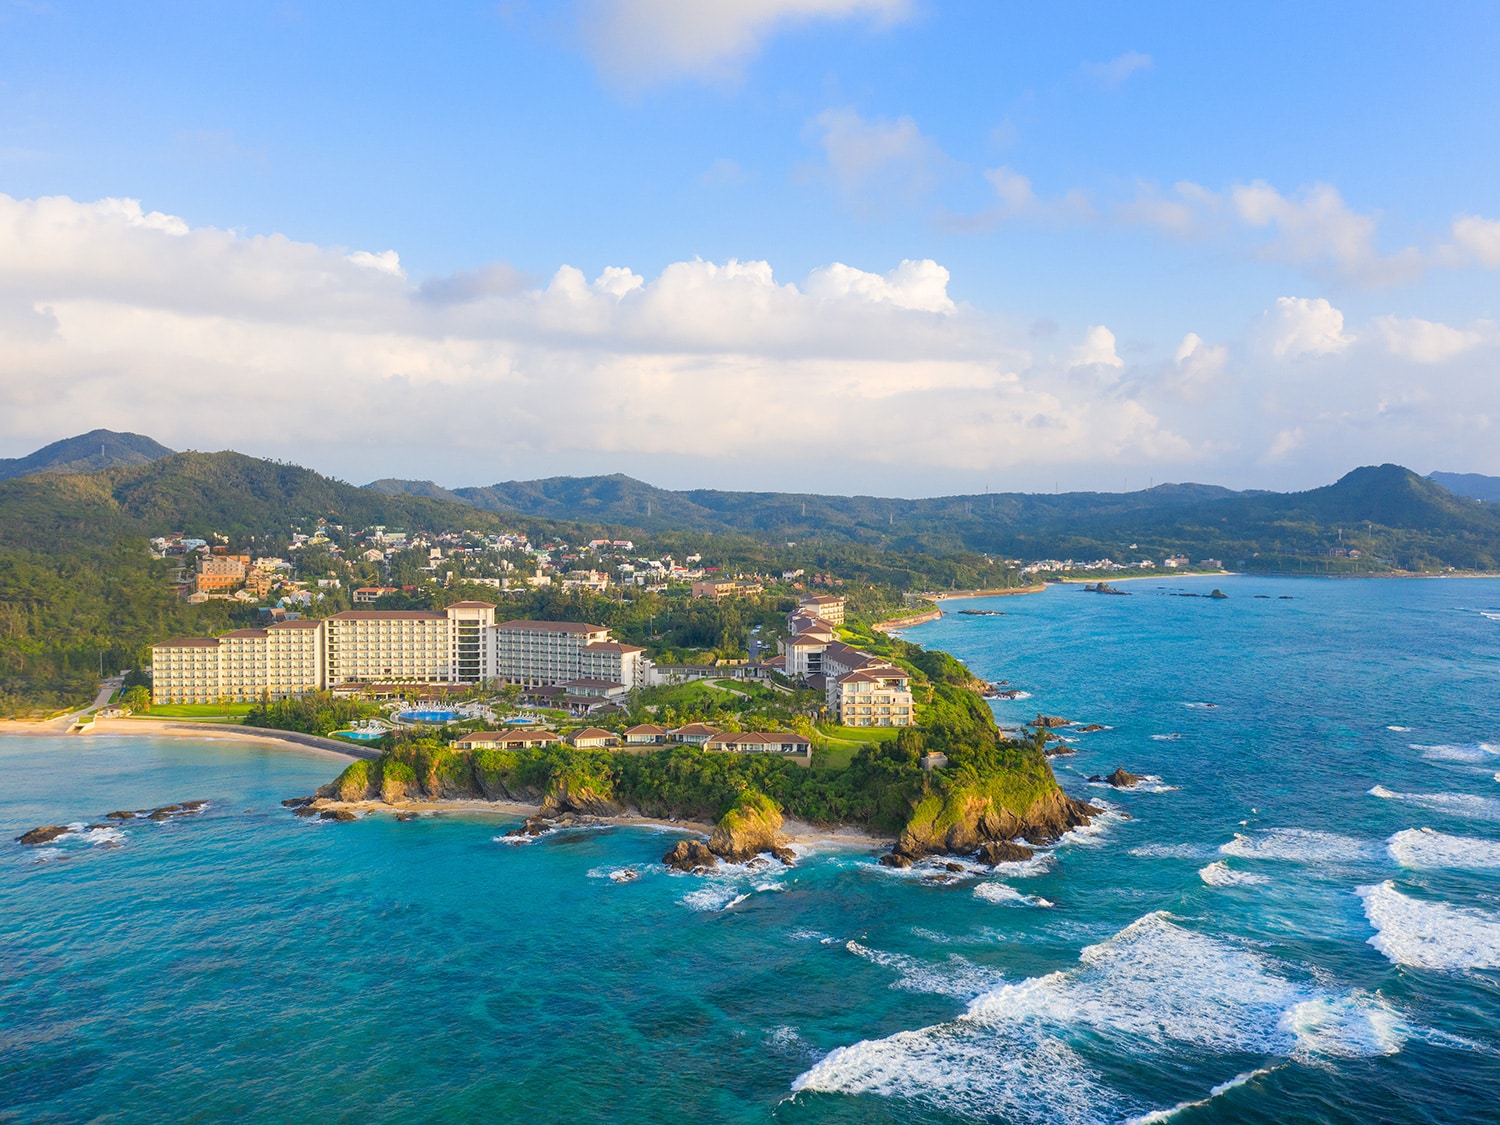 An aerial view of the Halekulani Okinawa resort in Japan.